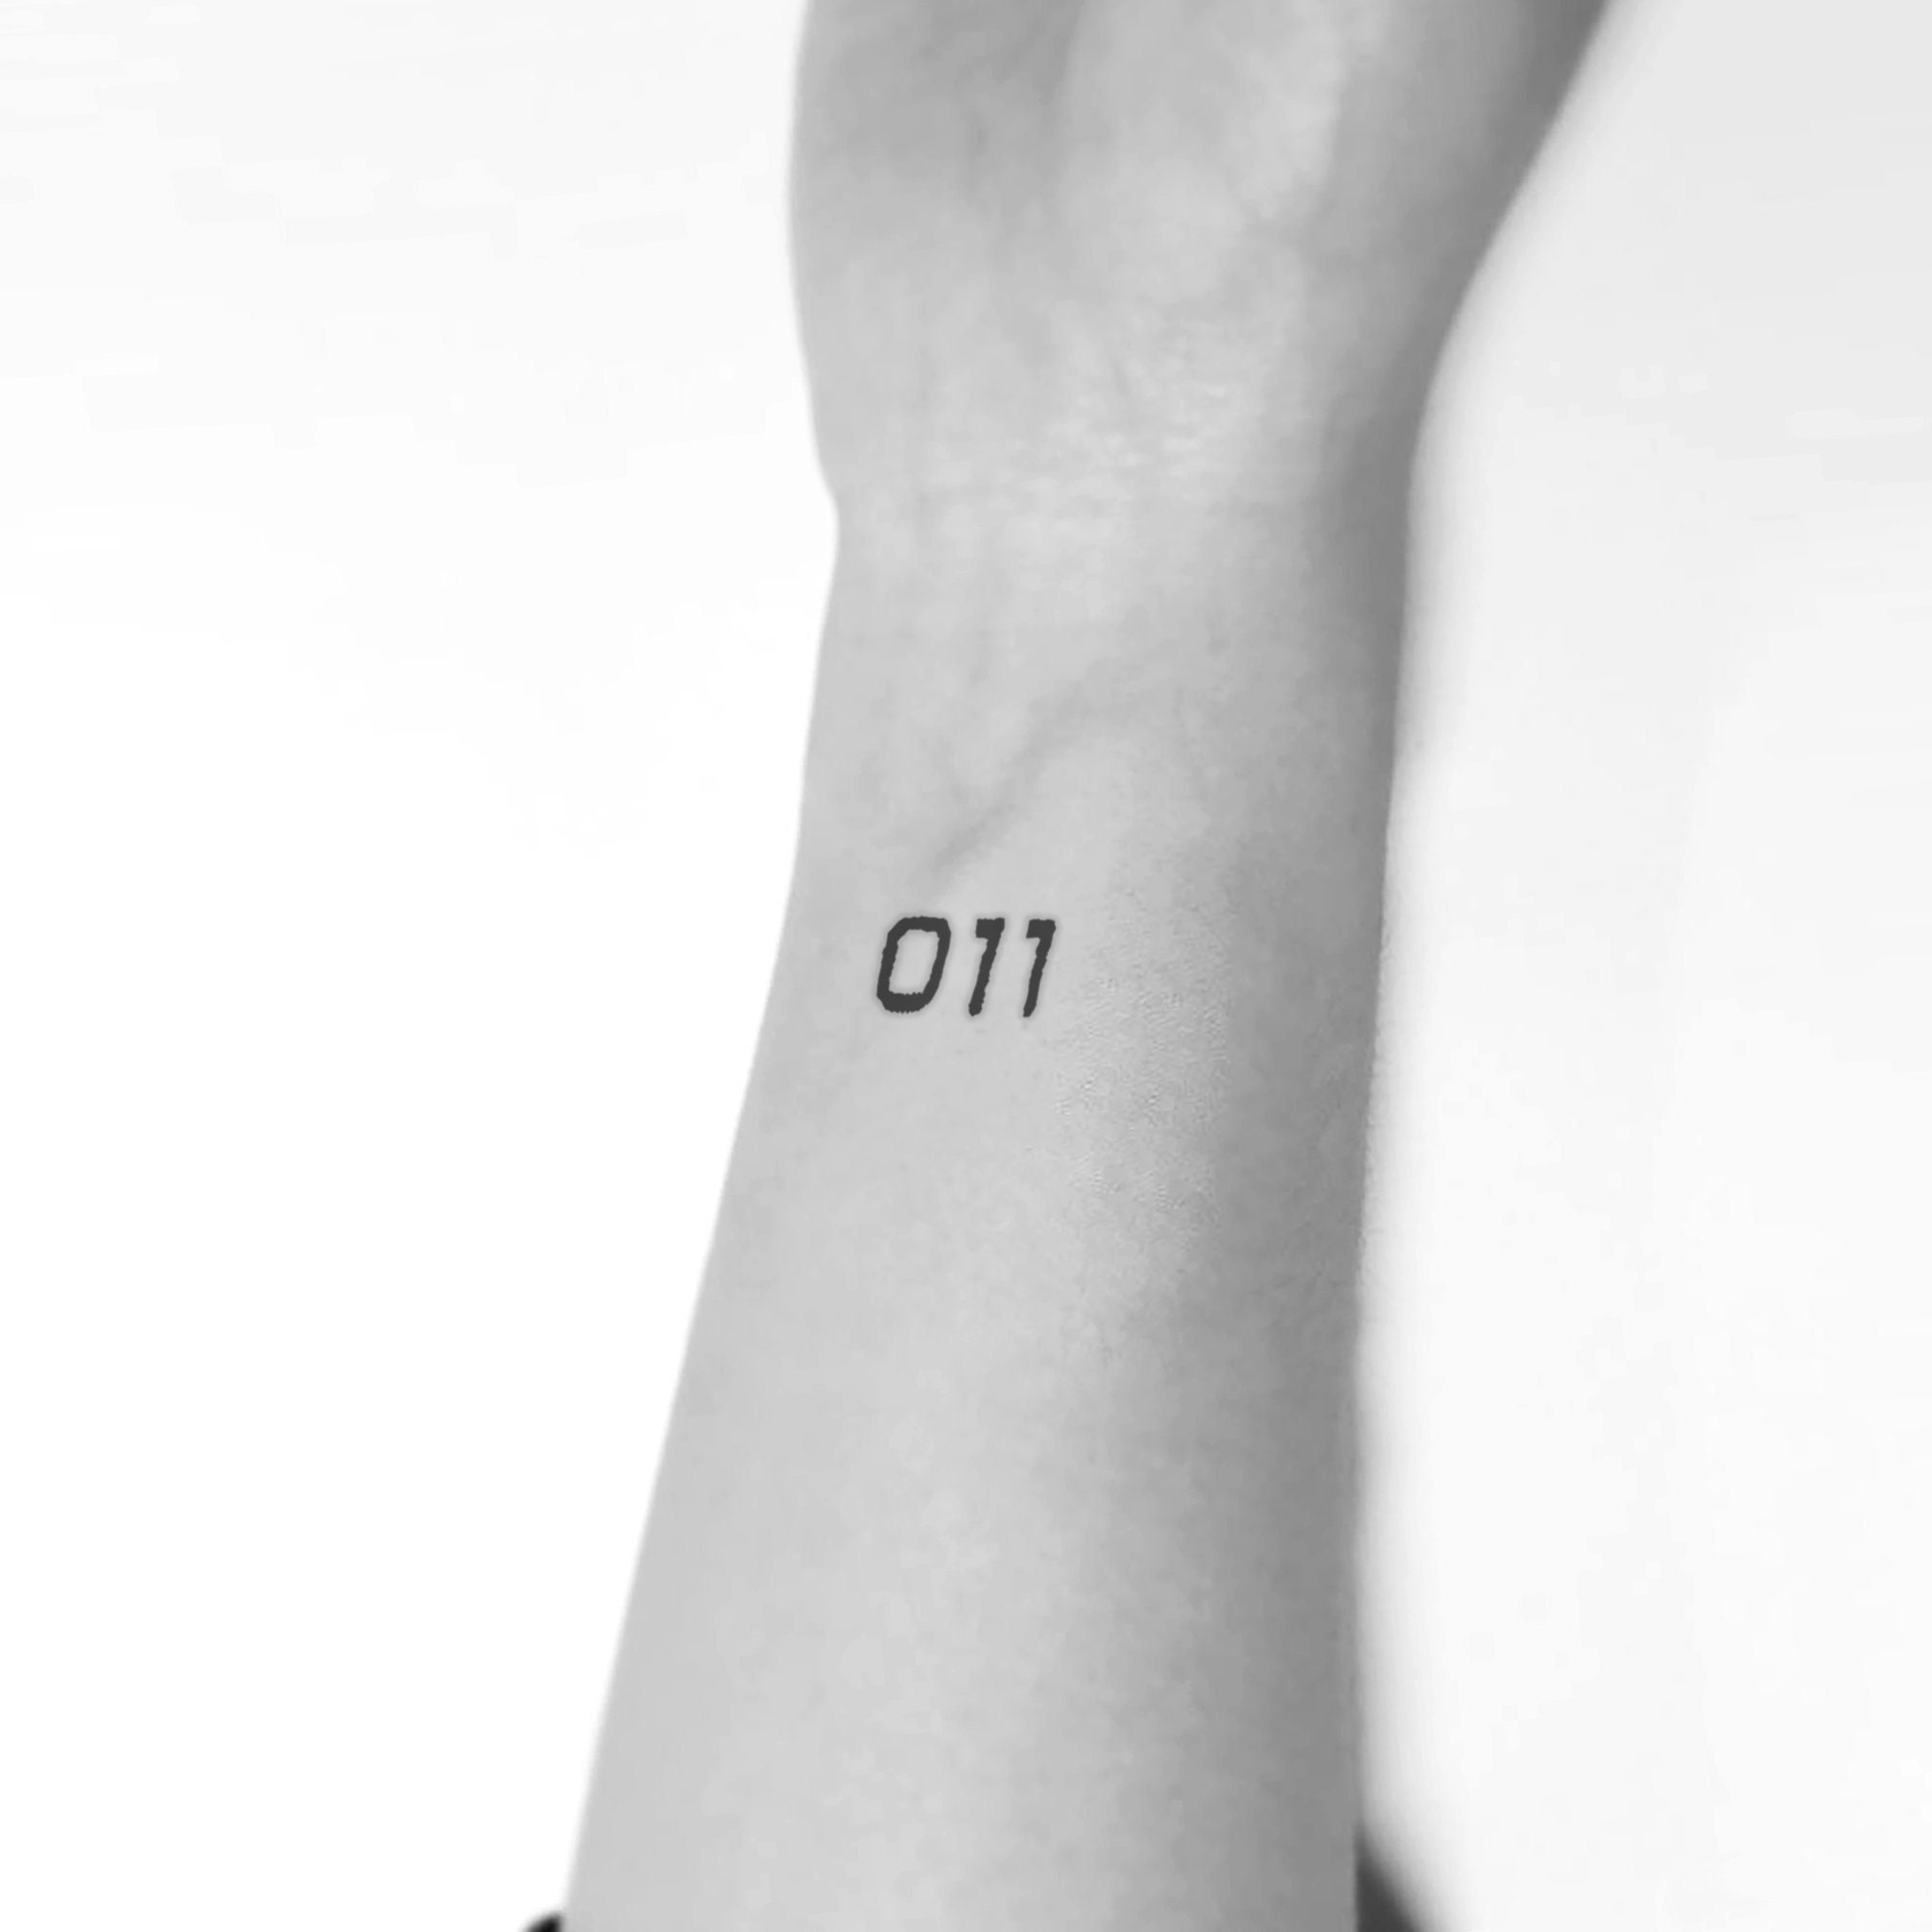 011  Temporary Tattoo  Realistic  Wrist Tattoo  Cosplay   Etsy